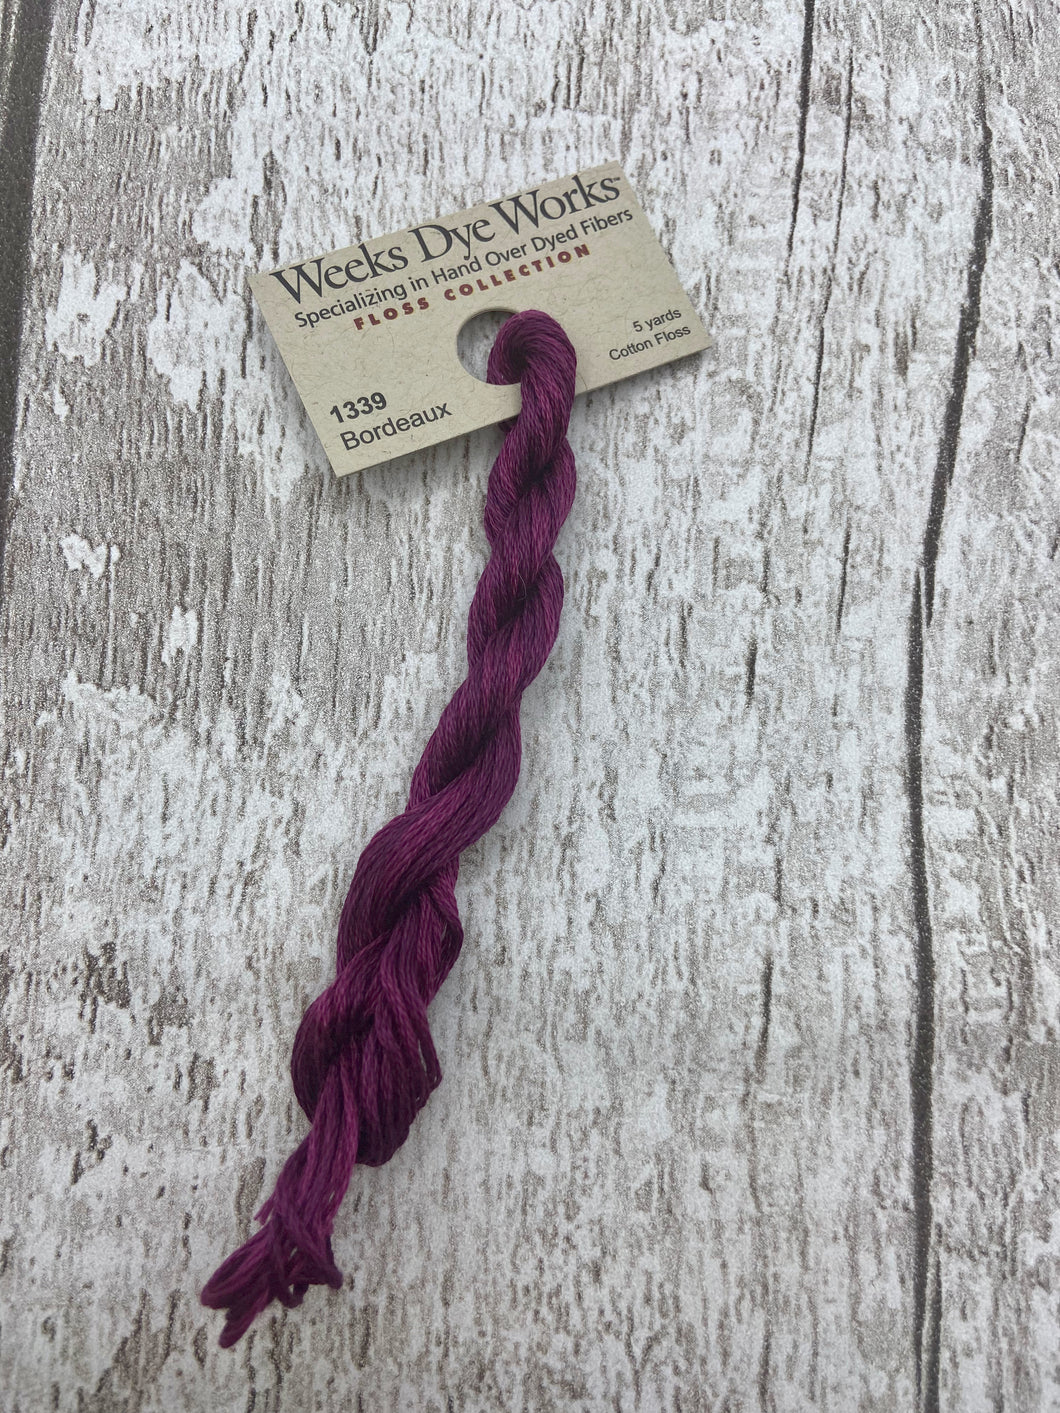 Bordeaux (#1339), Weeks Dye Works 6-strand cotton floss